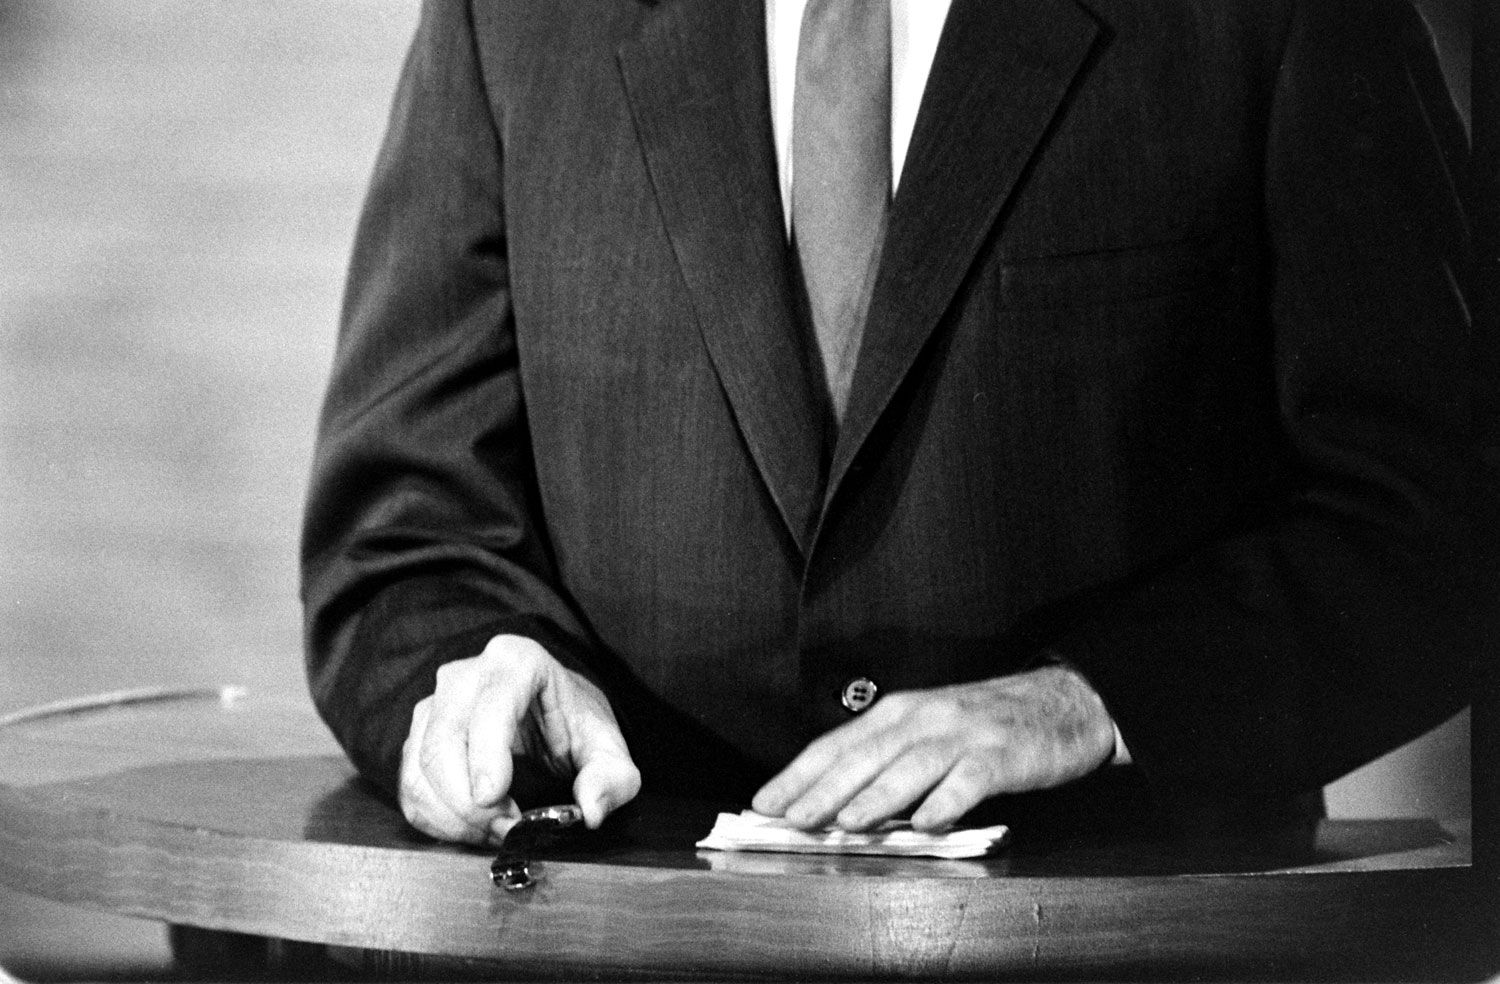 Richard Nixon's hands during the Kennedy-Nixon debates, 1960.